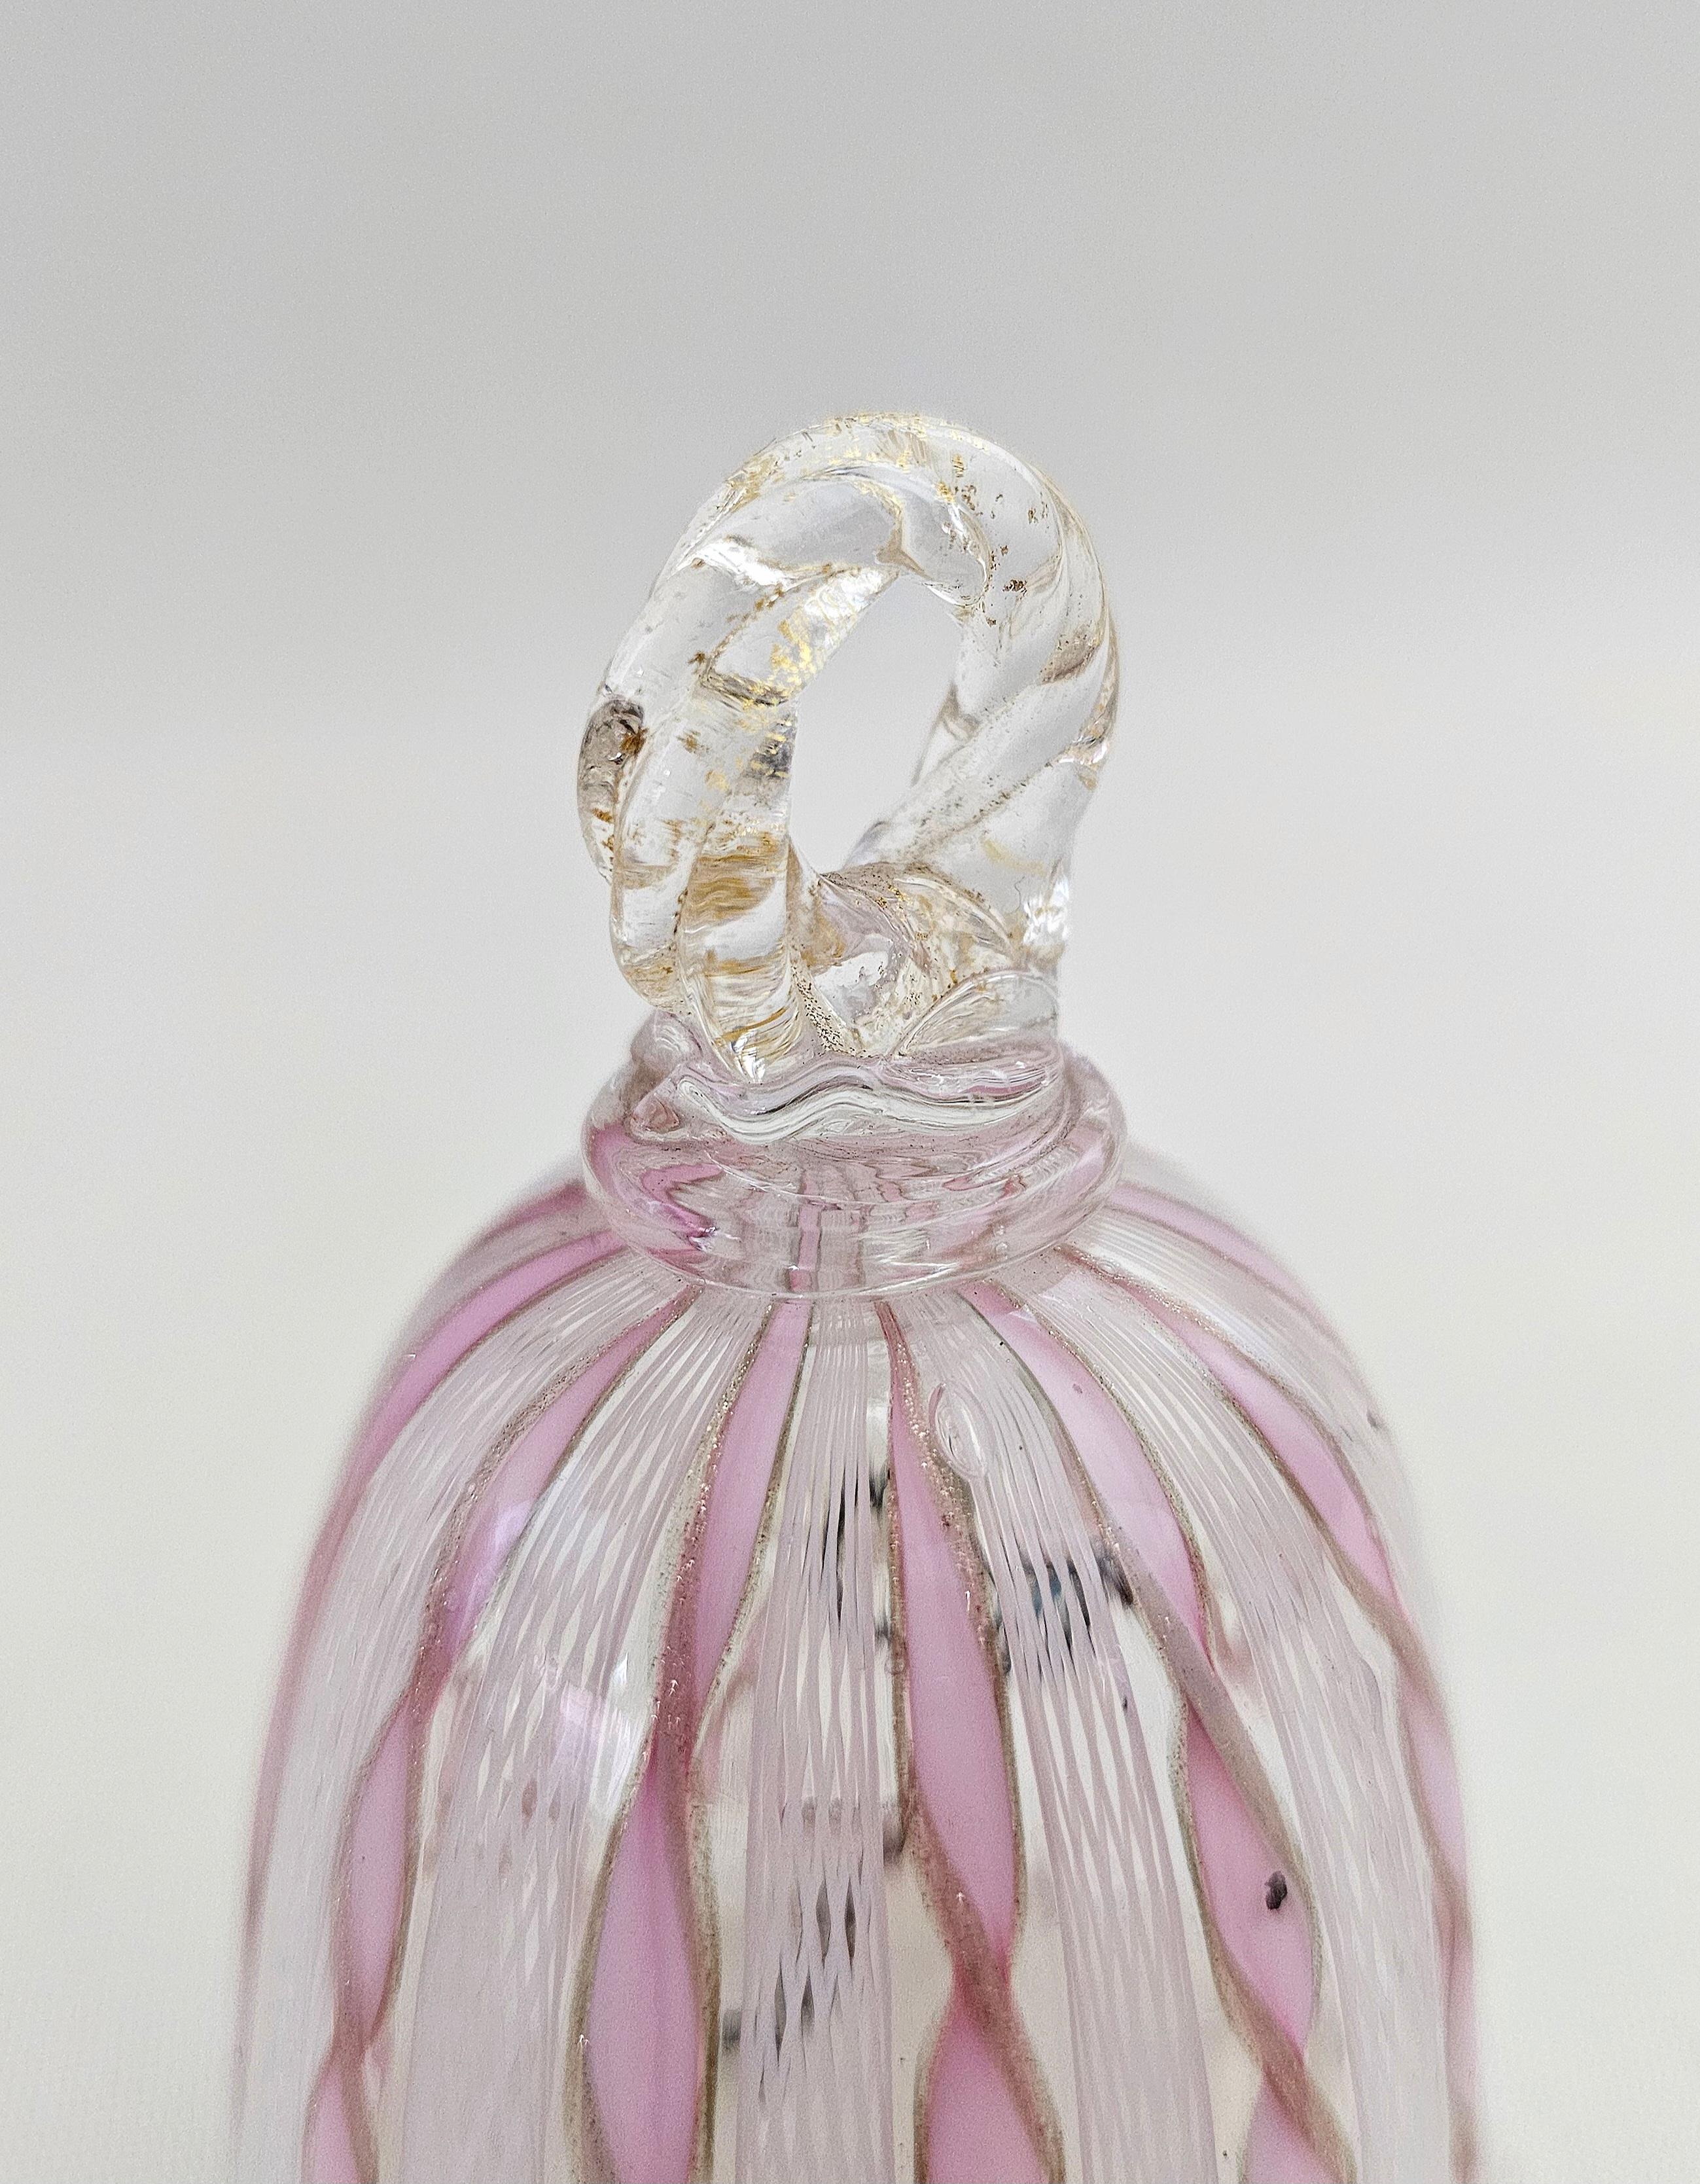 20th Century Decorative Object Bell Murano Glass Midcentury Italia Design 1970s For Sale